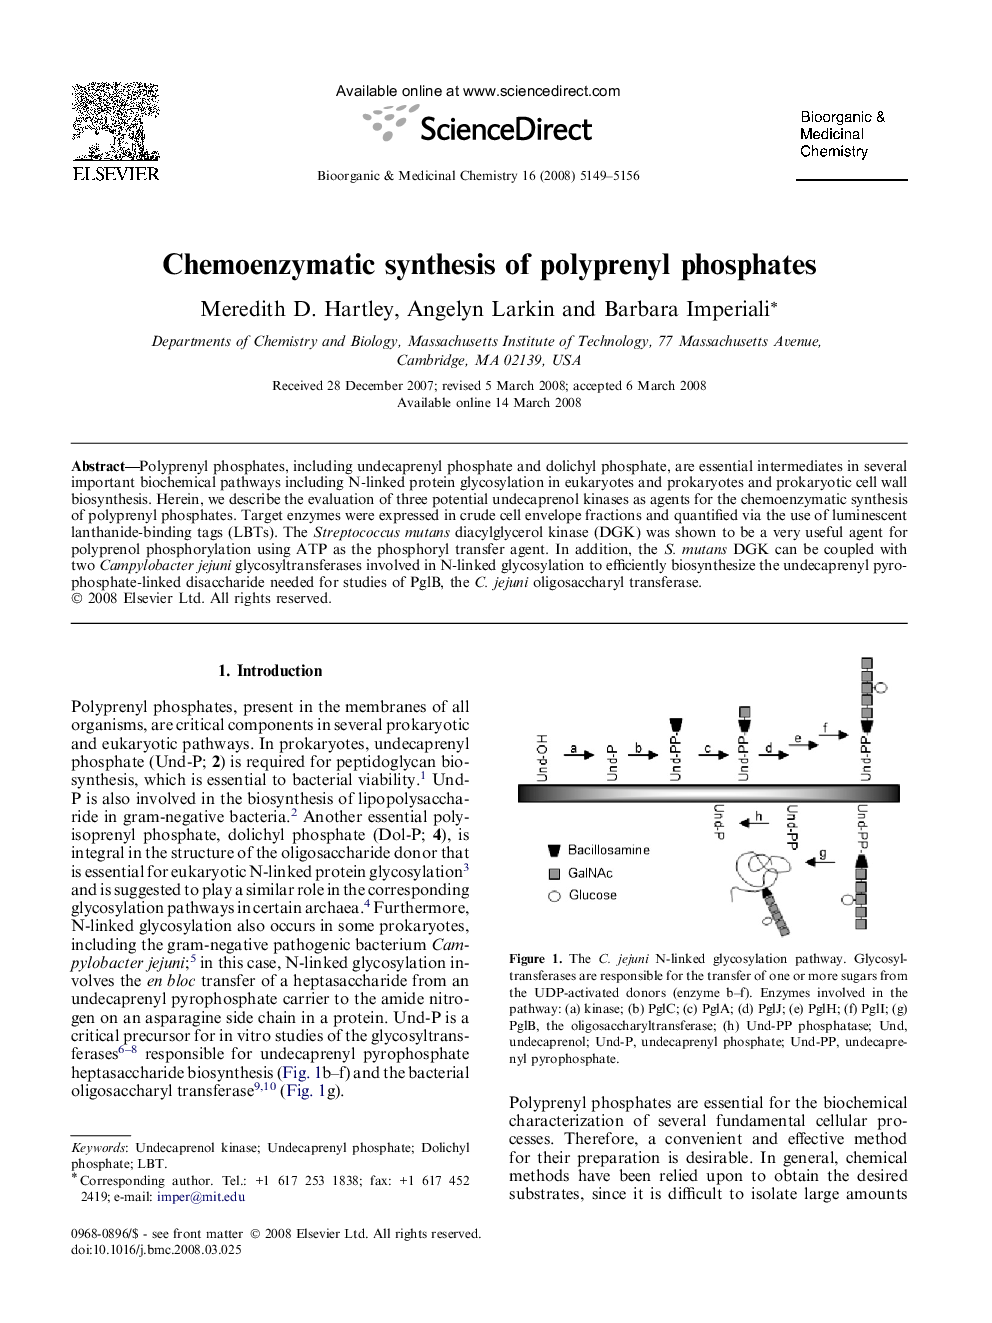 Chemoenzymatic synthesis of polyprenyl phosphates